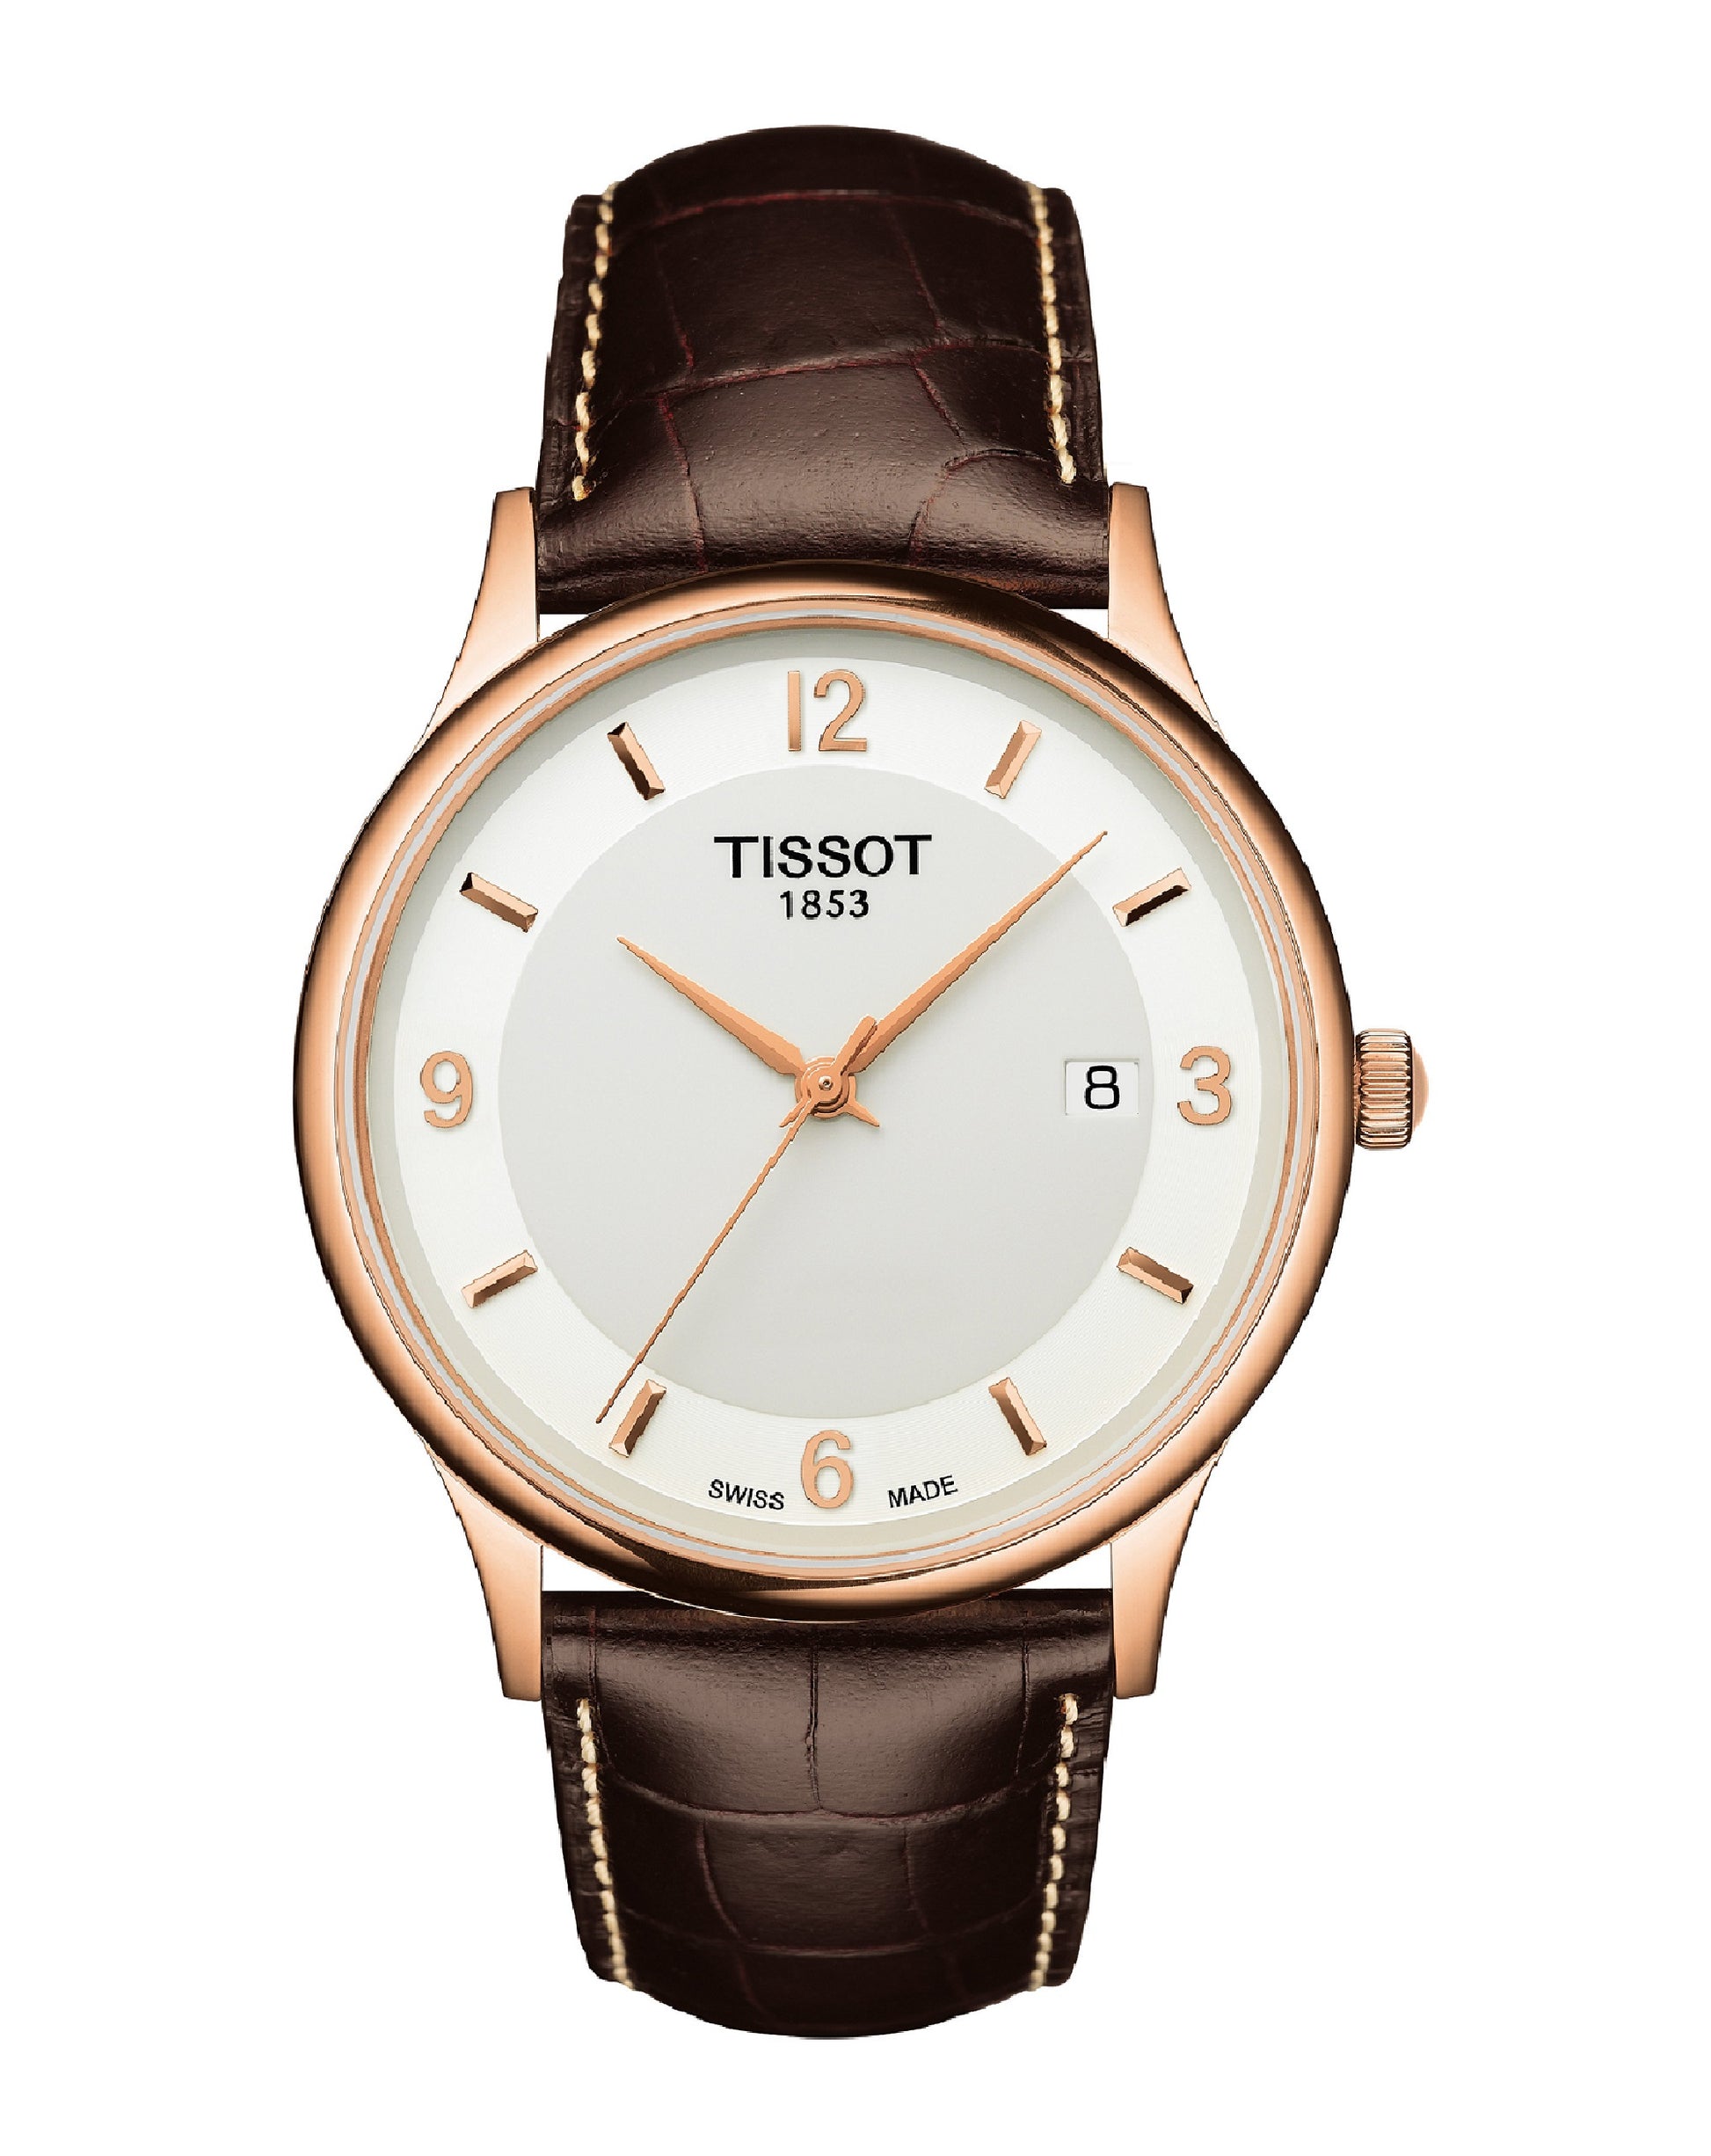 Tissot T914.410.46.017.00 Tissot T-GOLD Classic GENT Rose Gold Watch